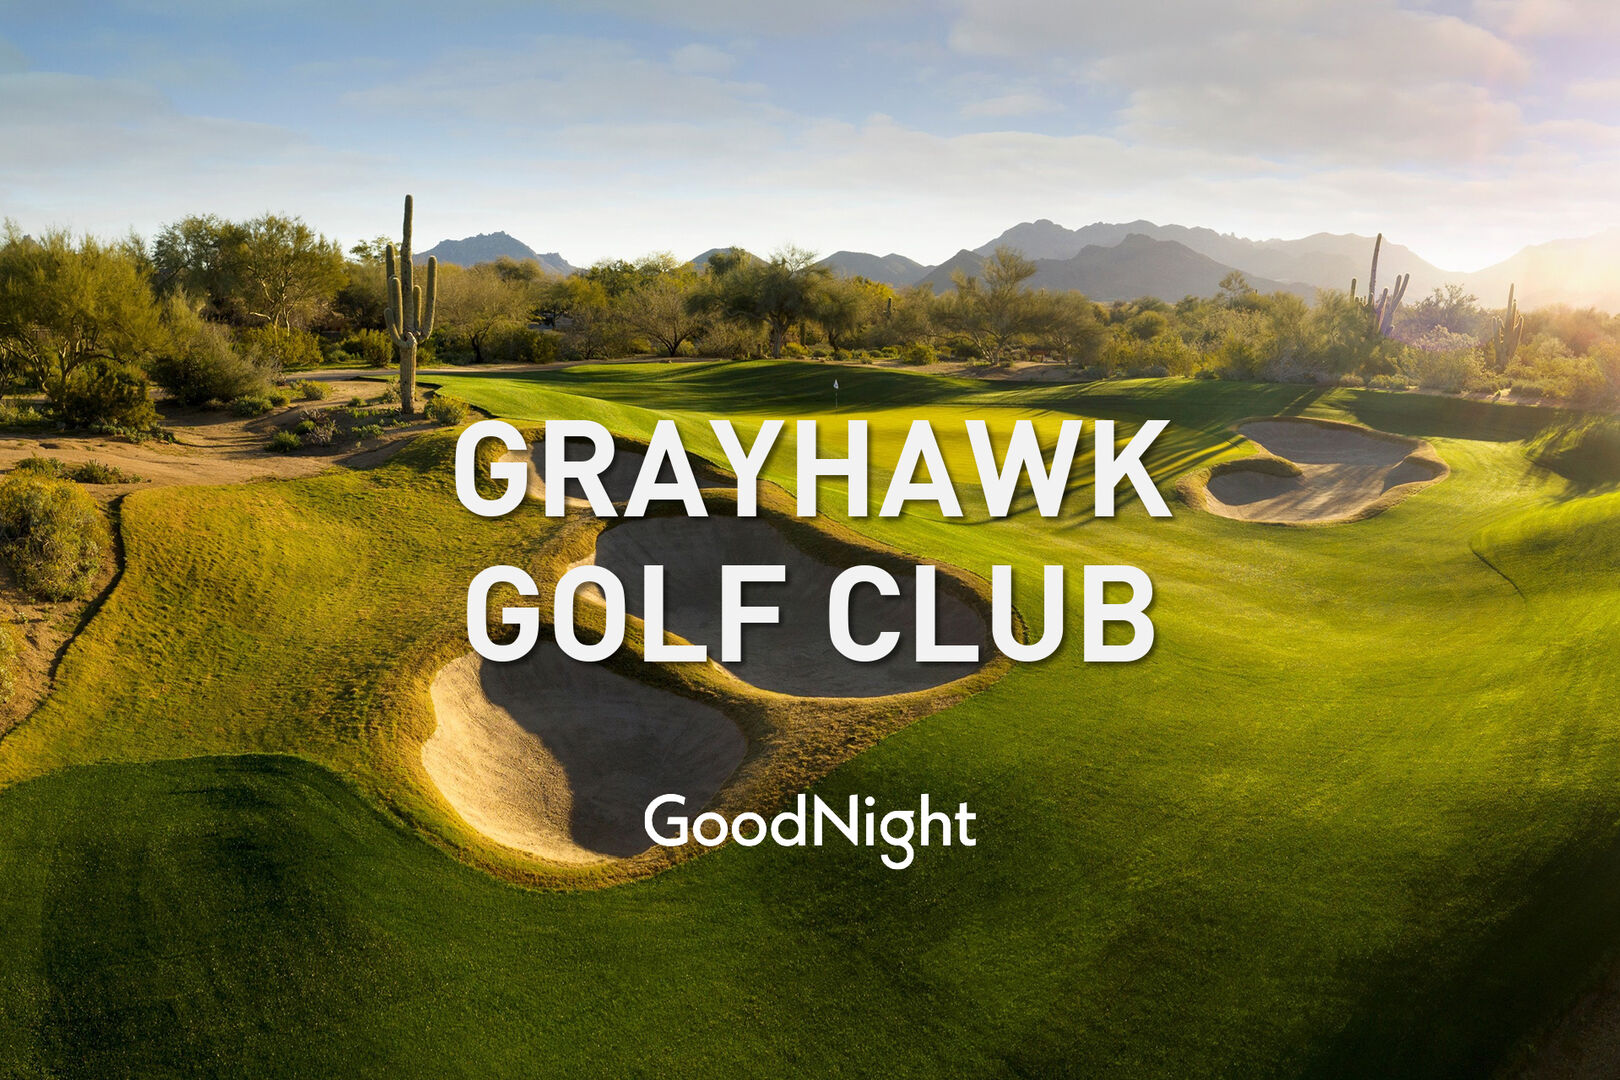 11 mins: Grayhawk Golf Club